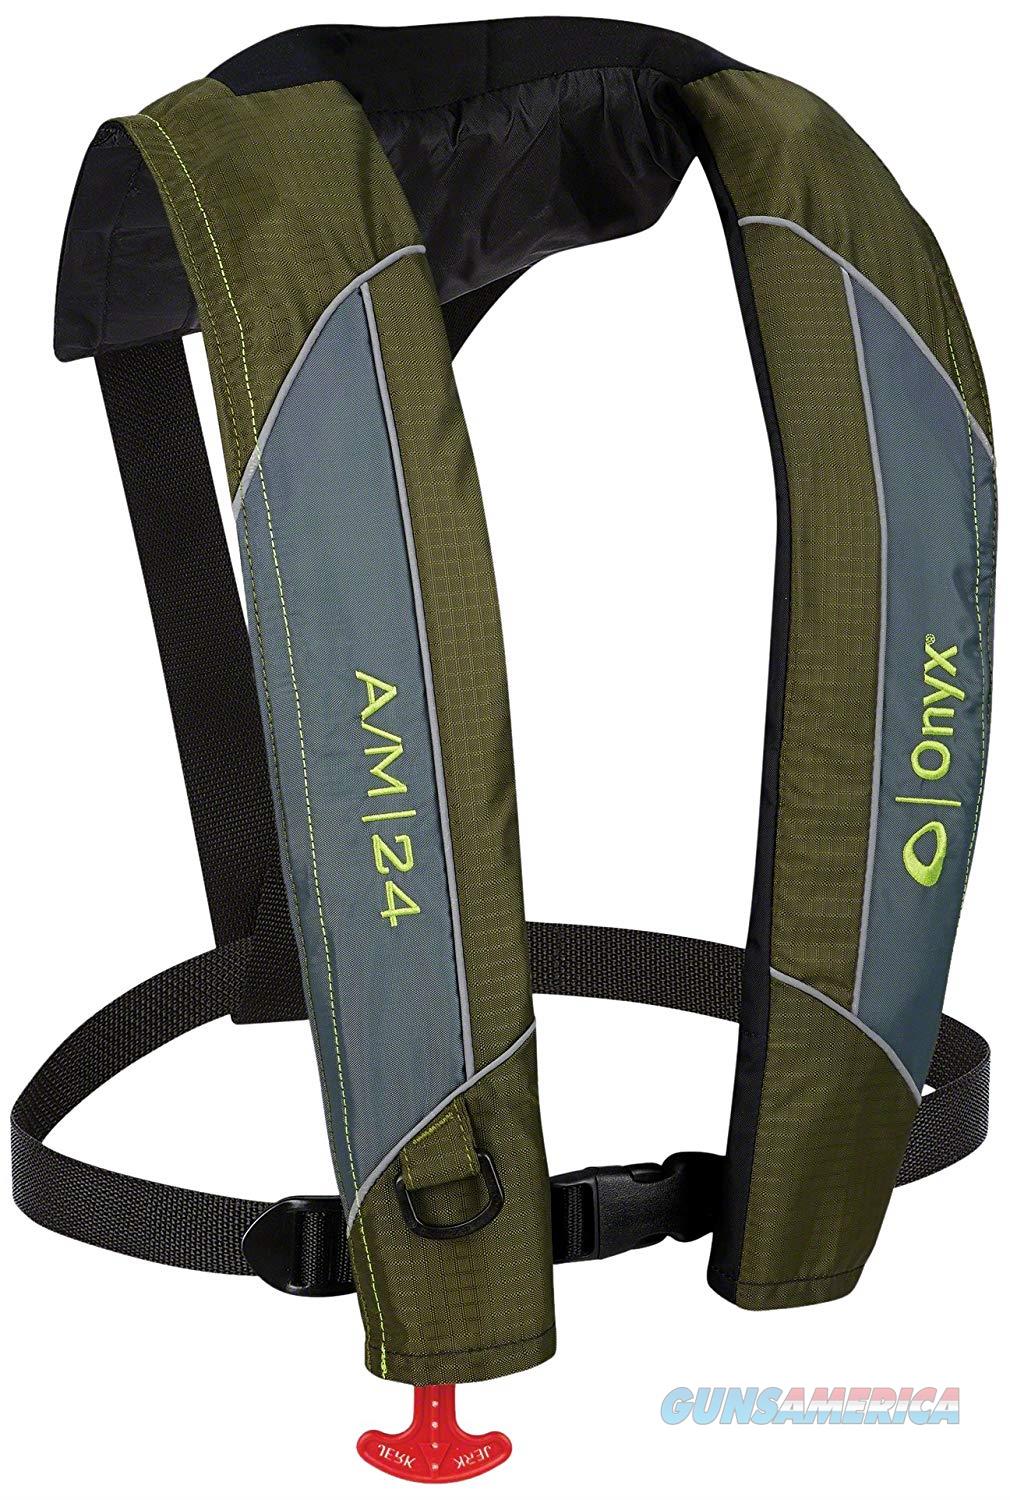 onyx life vest weight limit